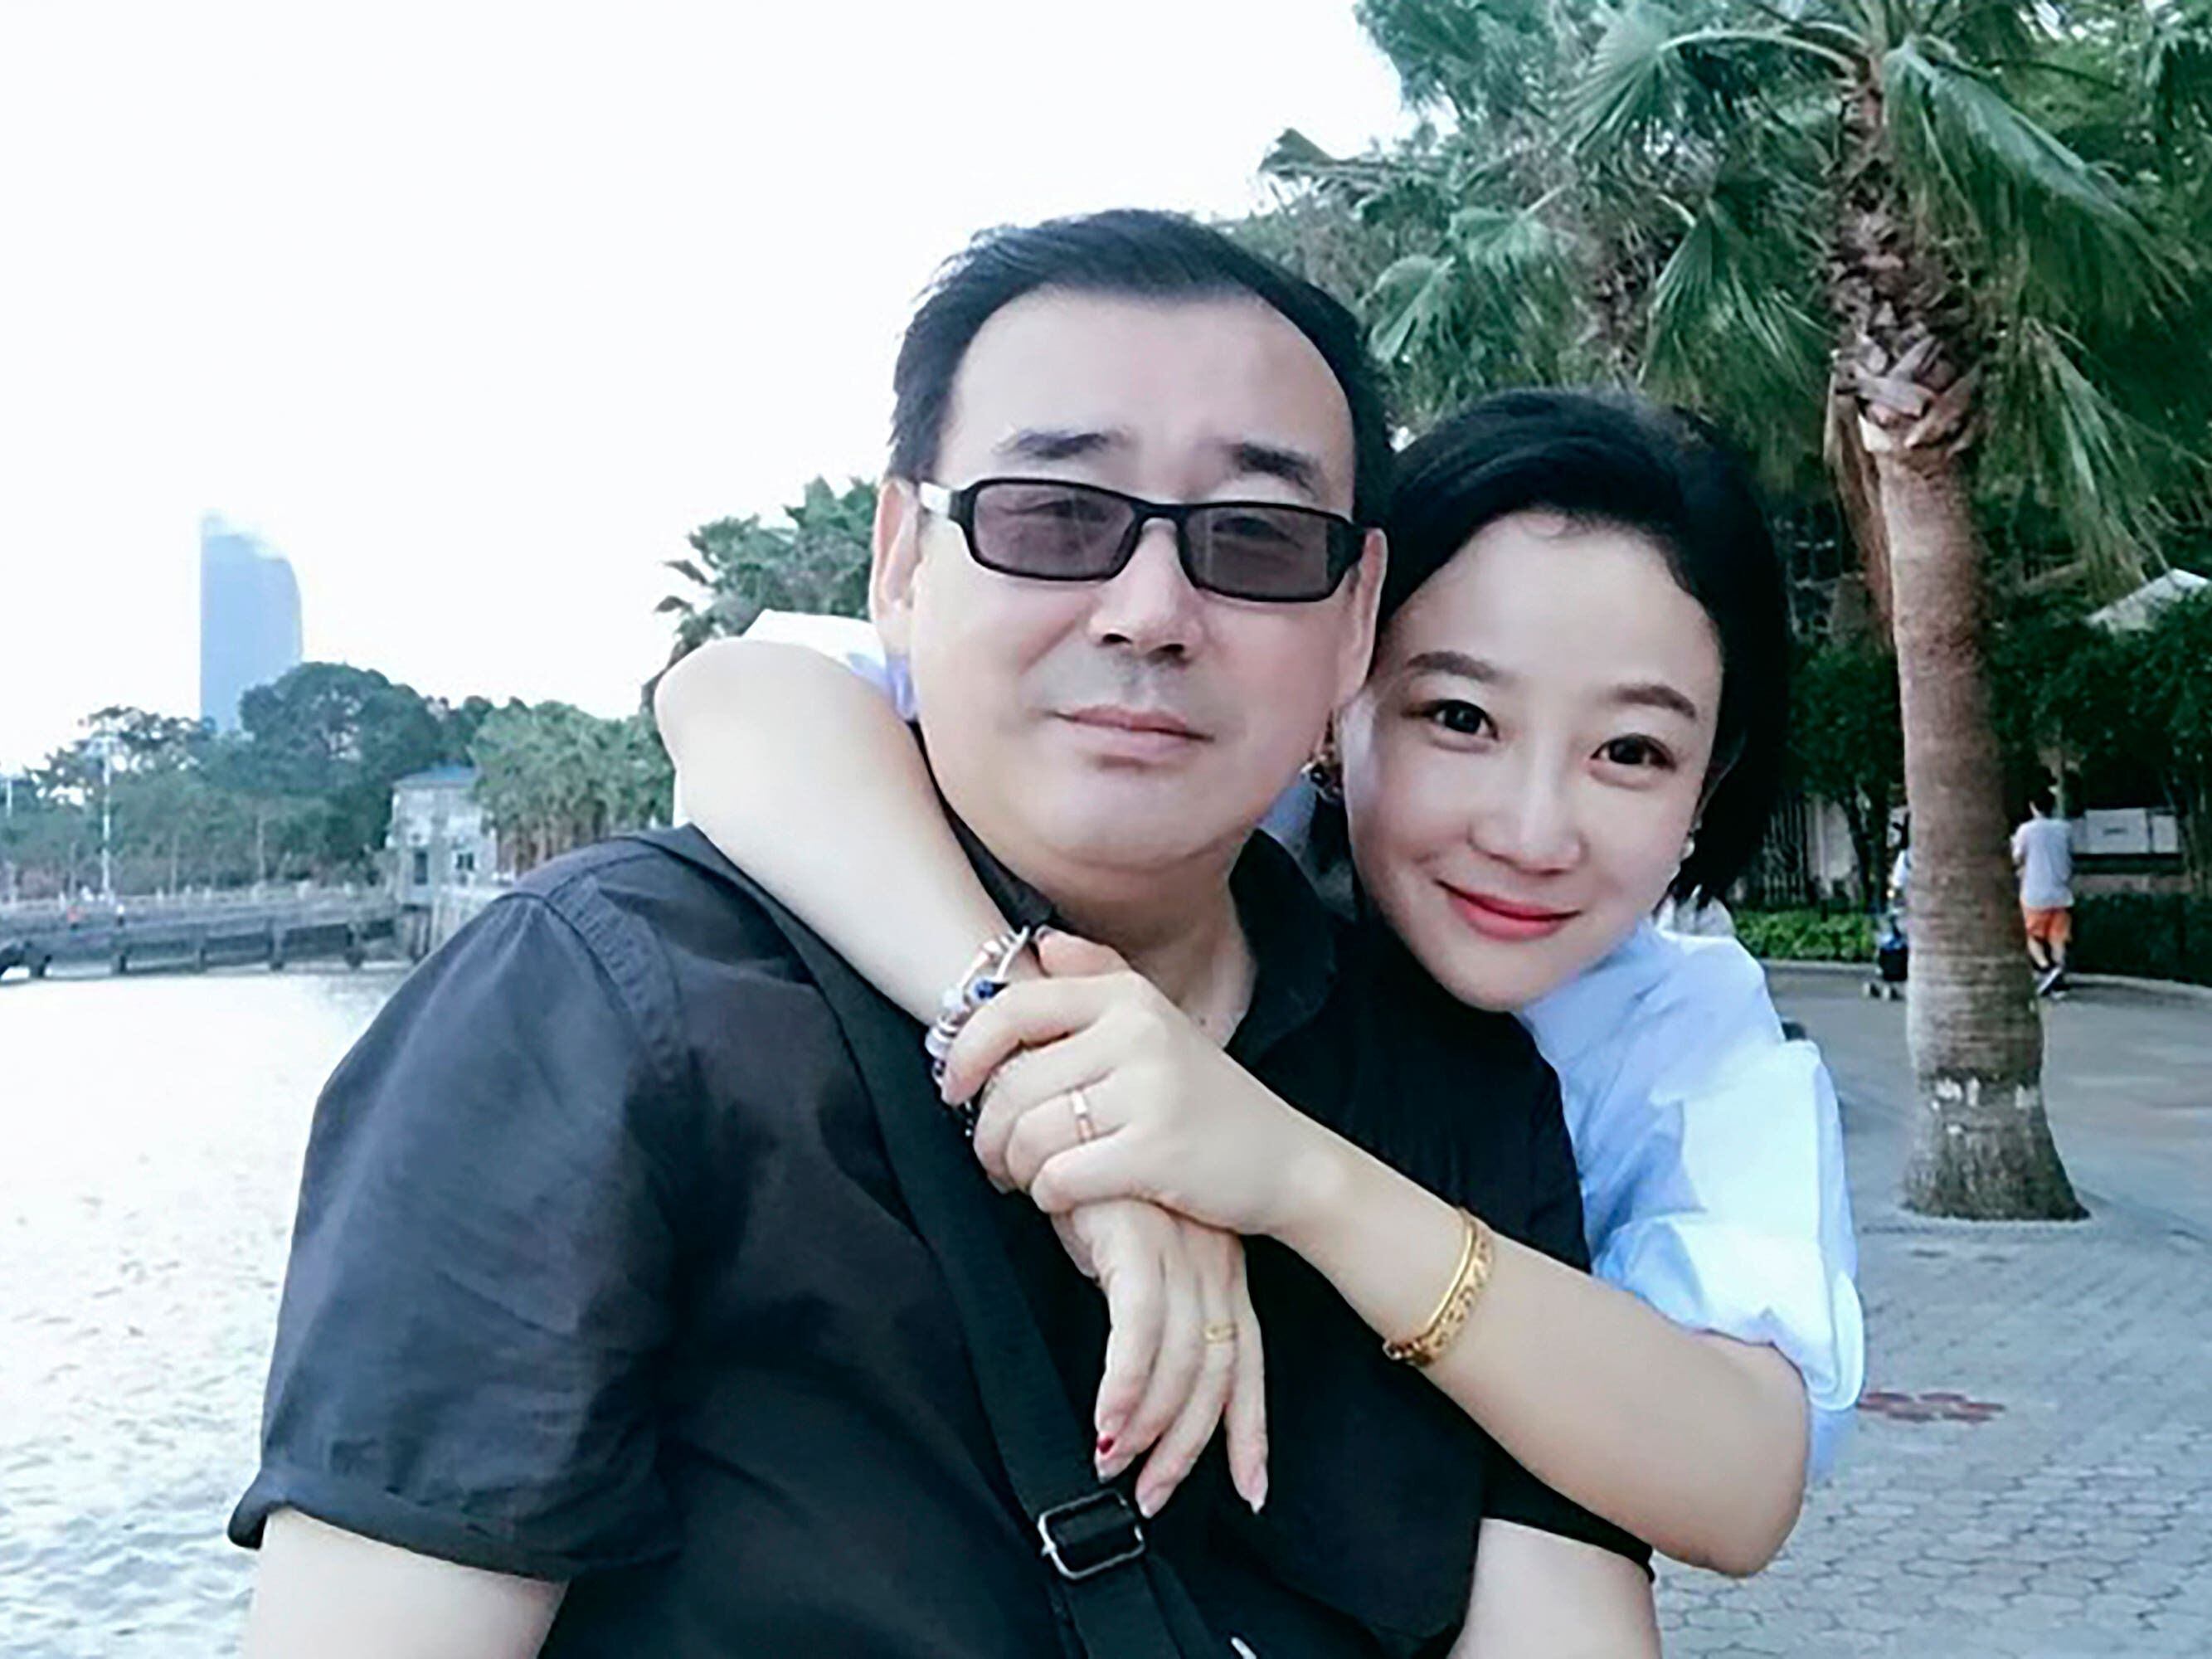 China-born Australian democracy blogger decides against appealing death sentence